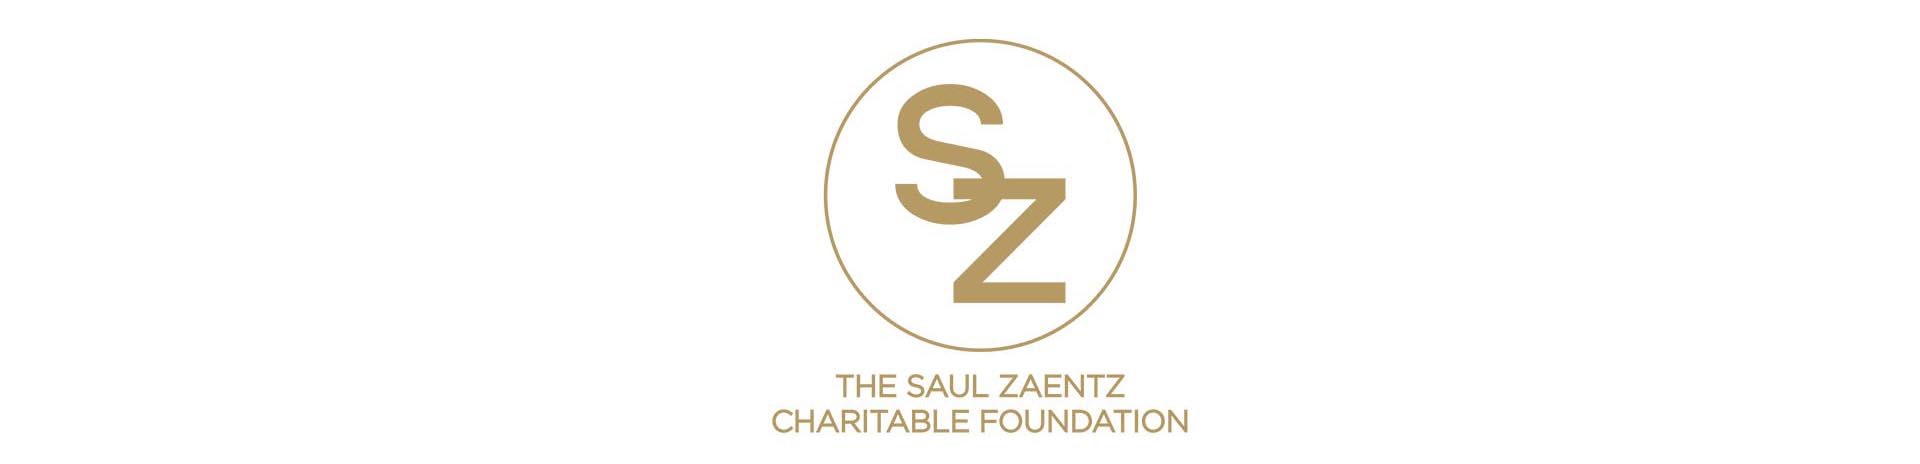 Saul Zaentz Charitable Foundation